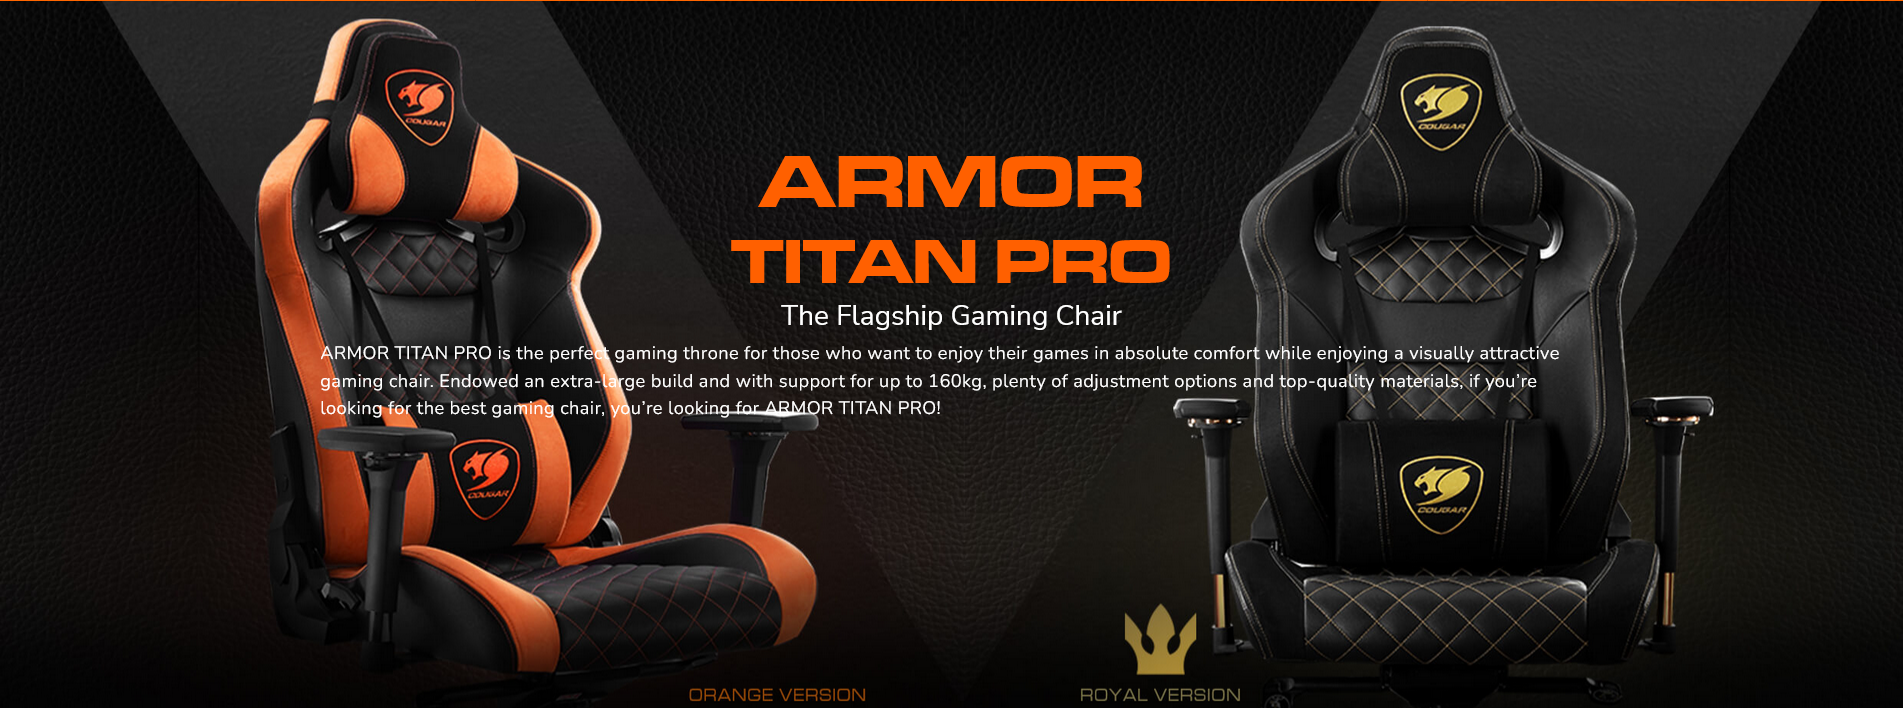 COUGAR Armor Titan Pro Royal The Flagship Gaming Chair